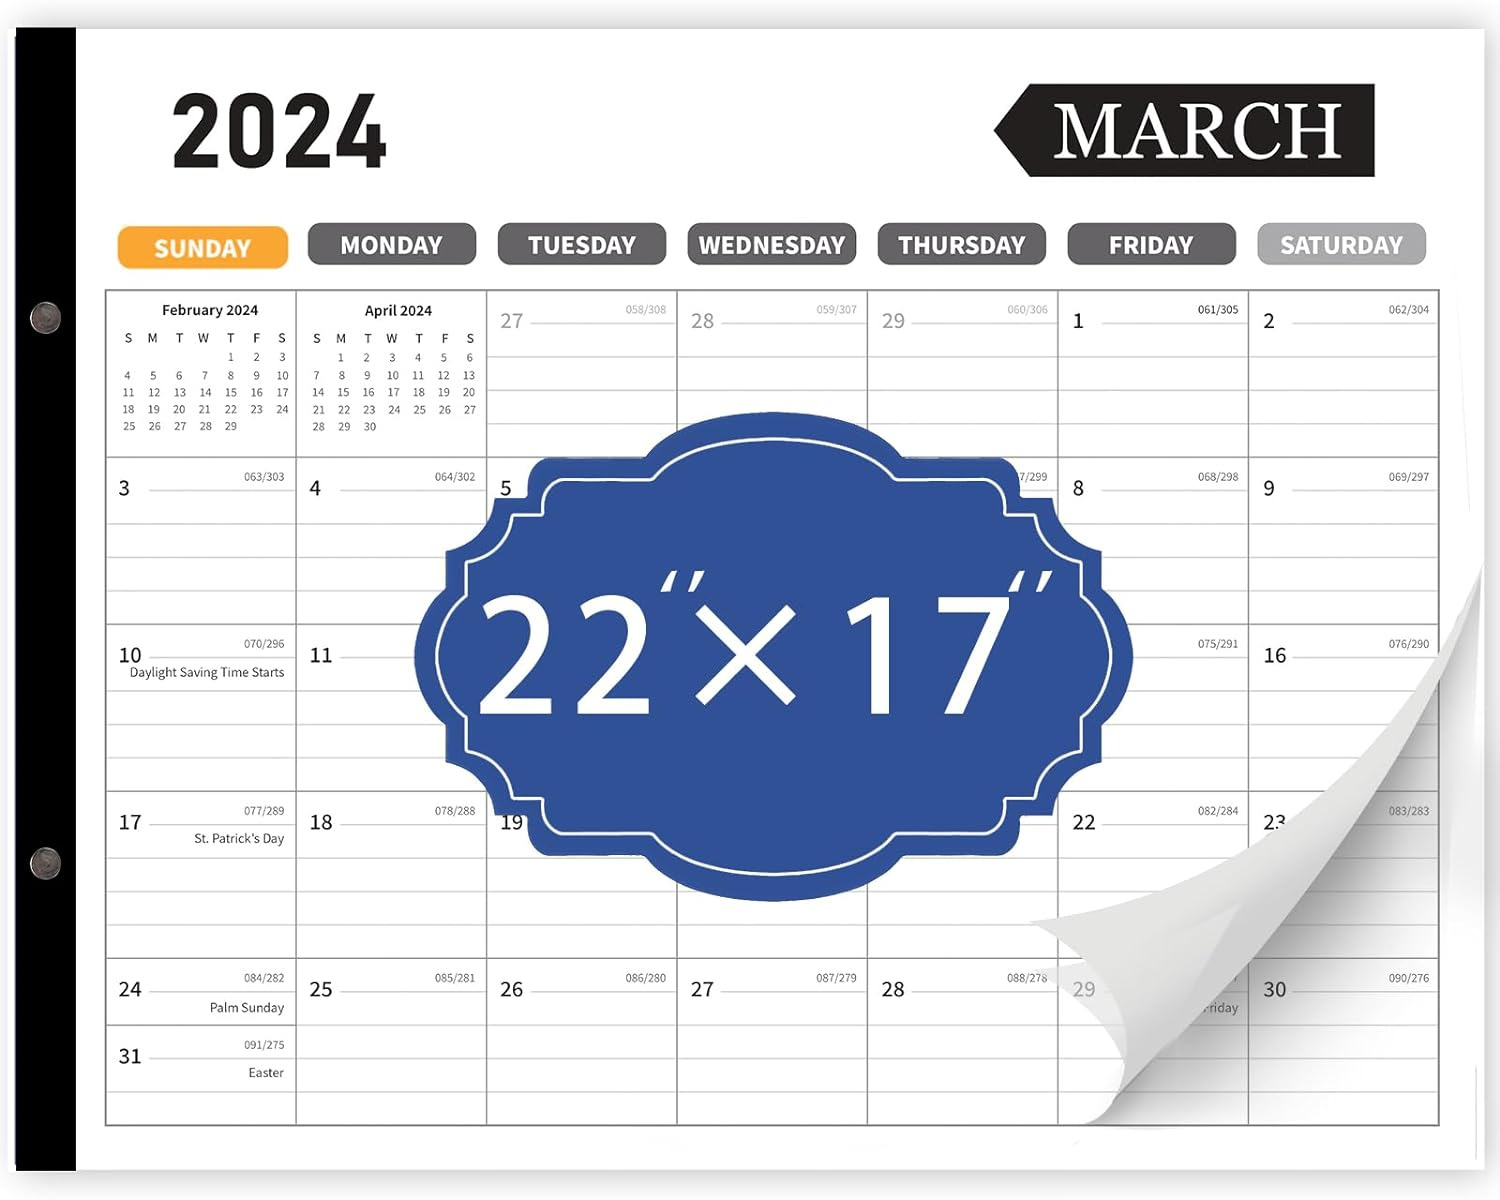 Desk Calendar 2024 Large 22X17, 18 Months, January 2024 to June 2025, 